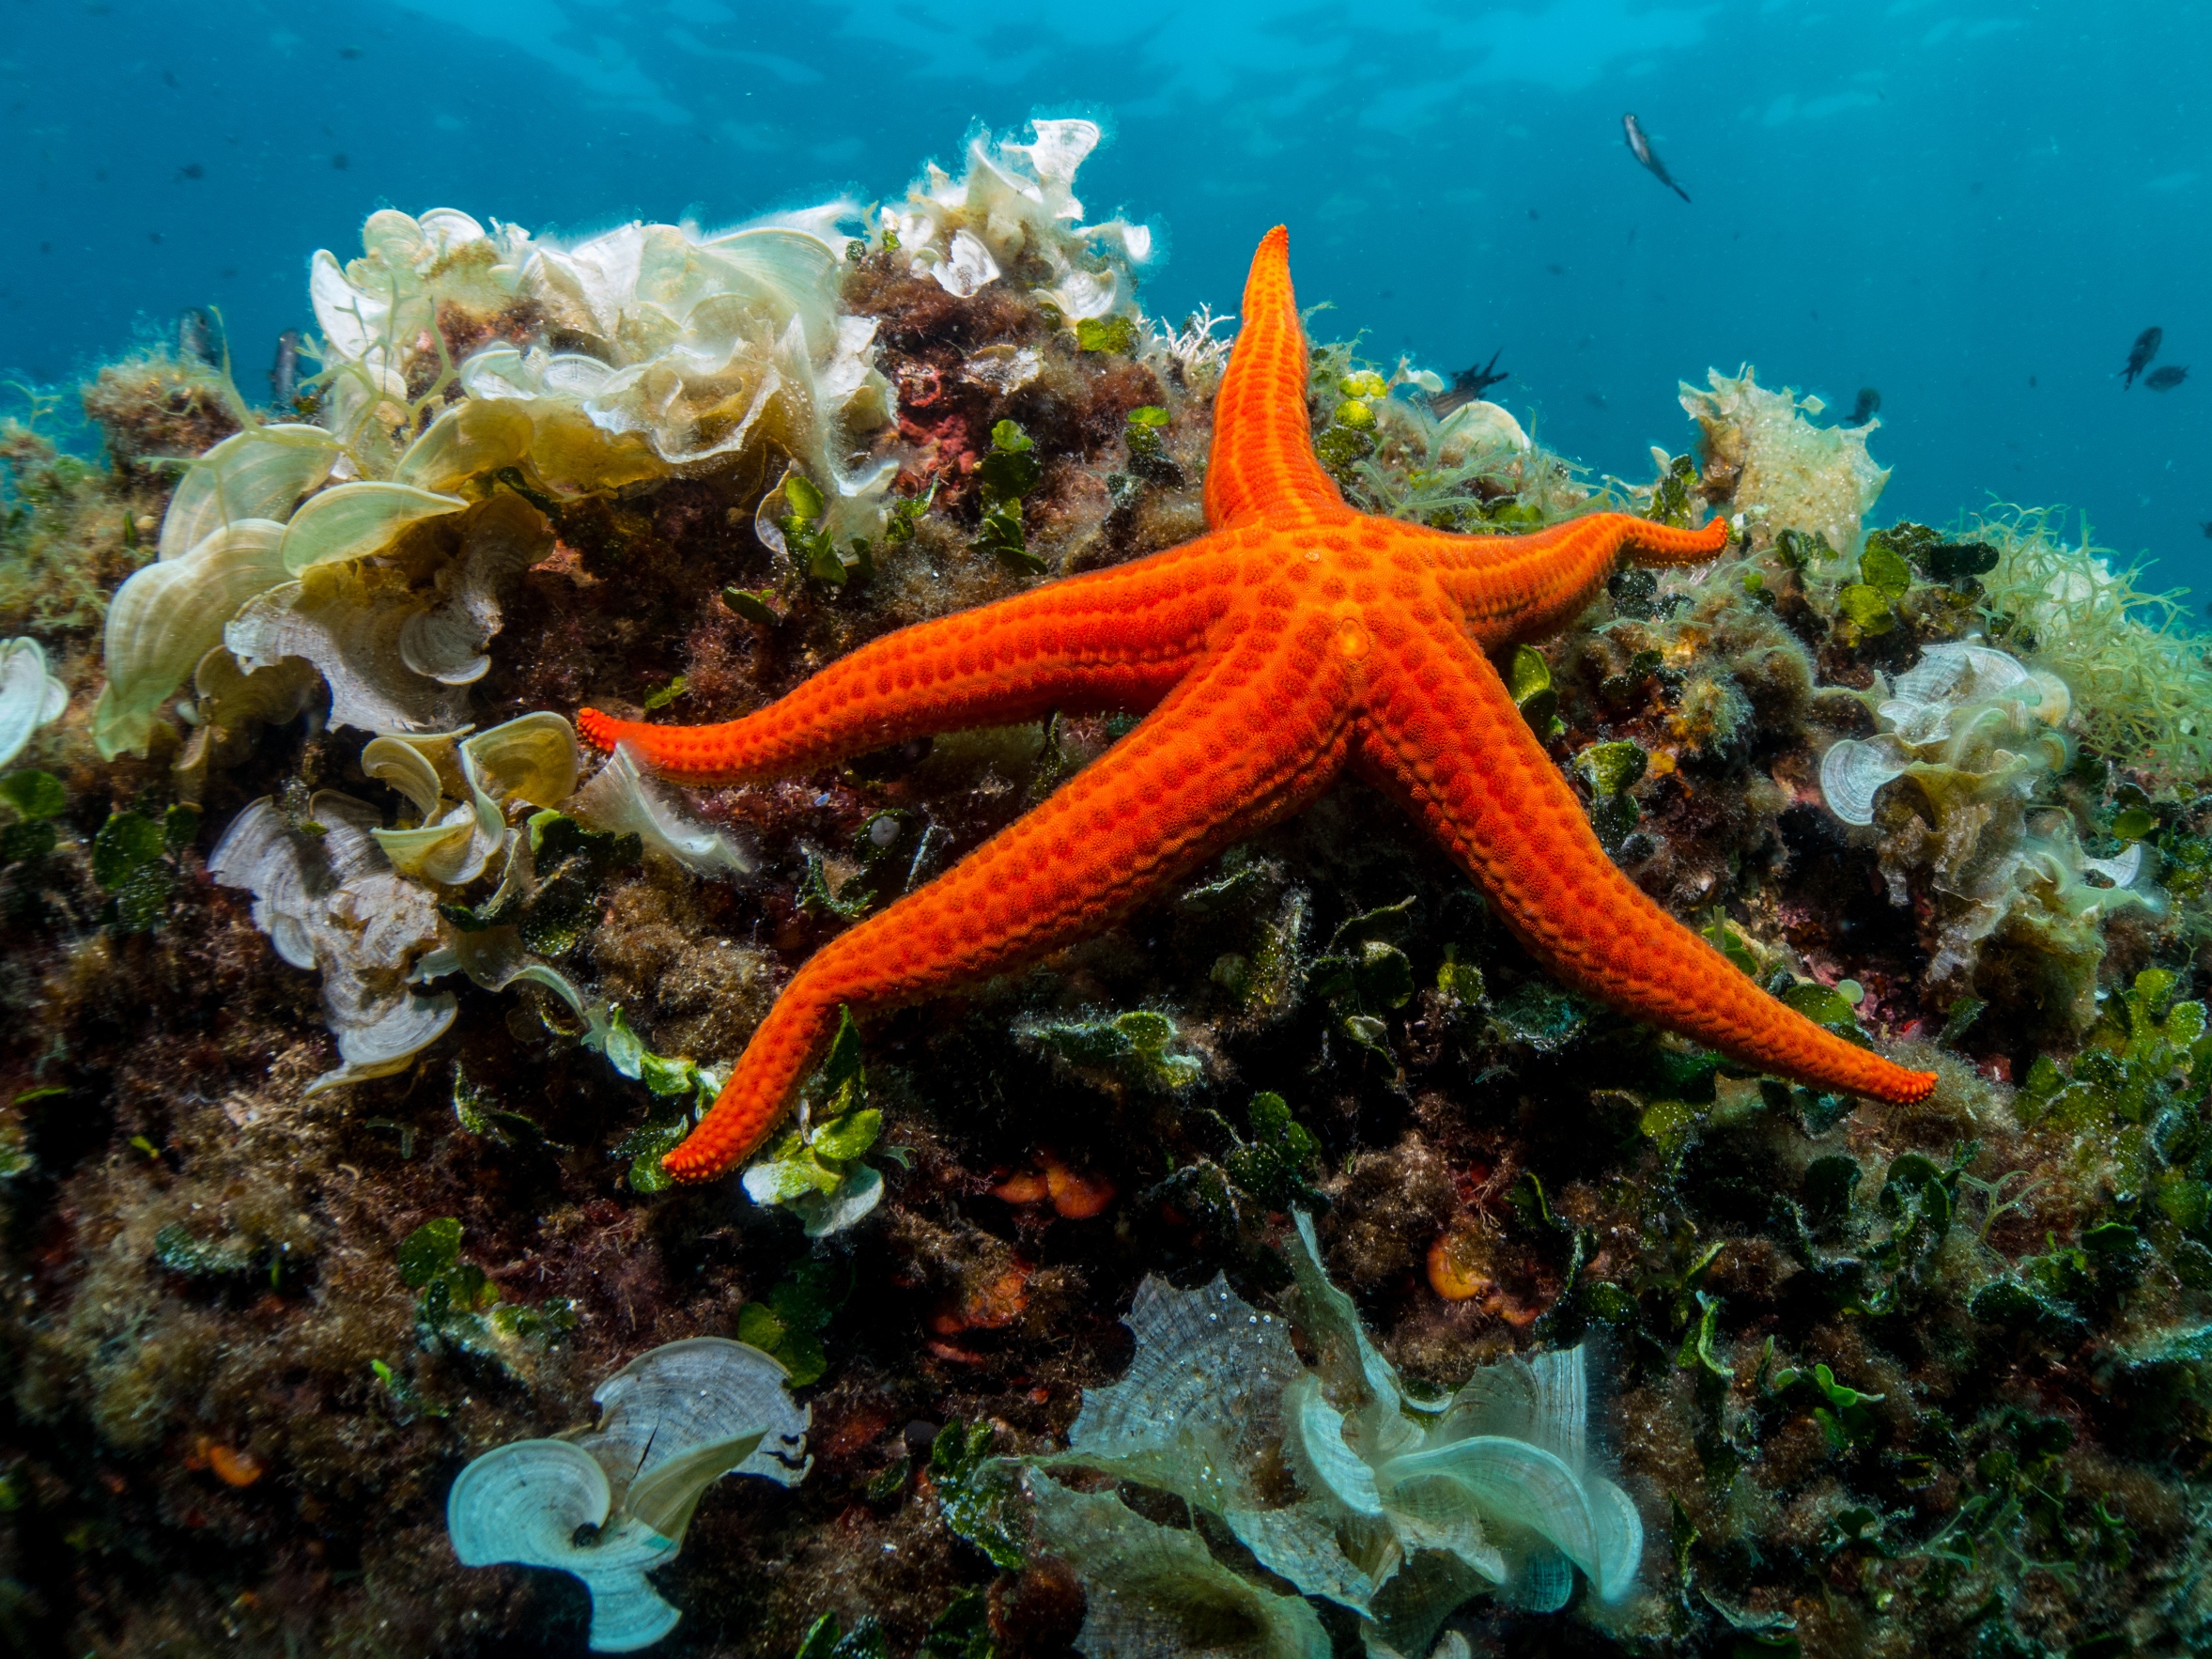 Starfish and sponge of the Mediterranean Sea.